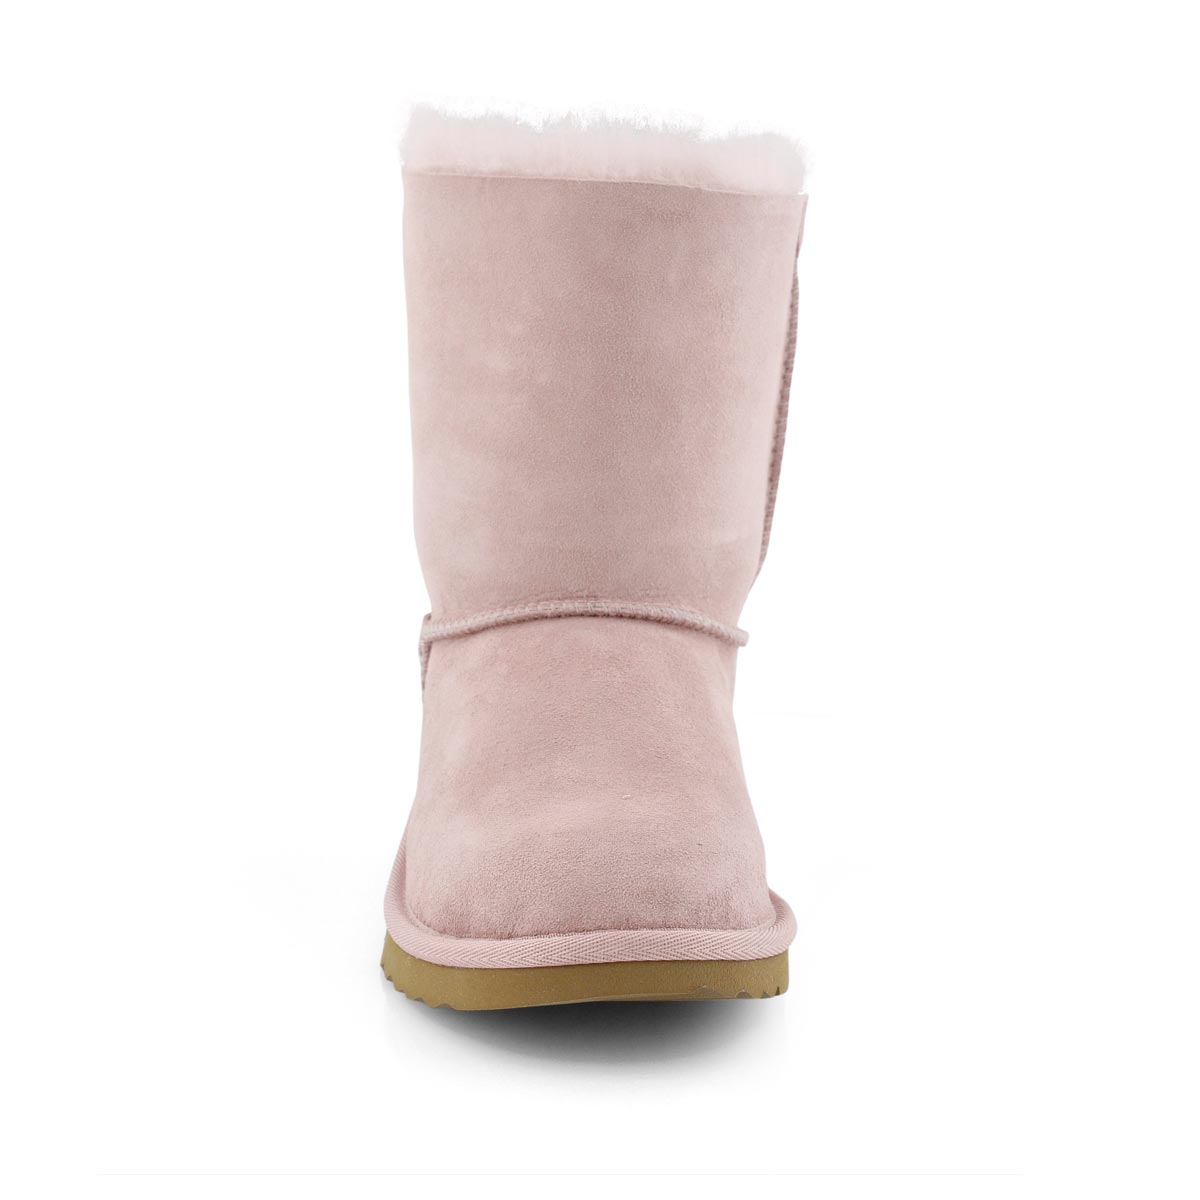 Girl's Bailey Bow II Sheepskin Boot - Pink Crystal